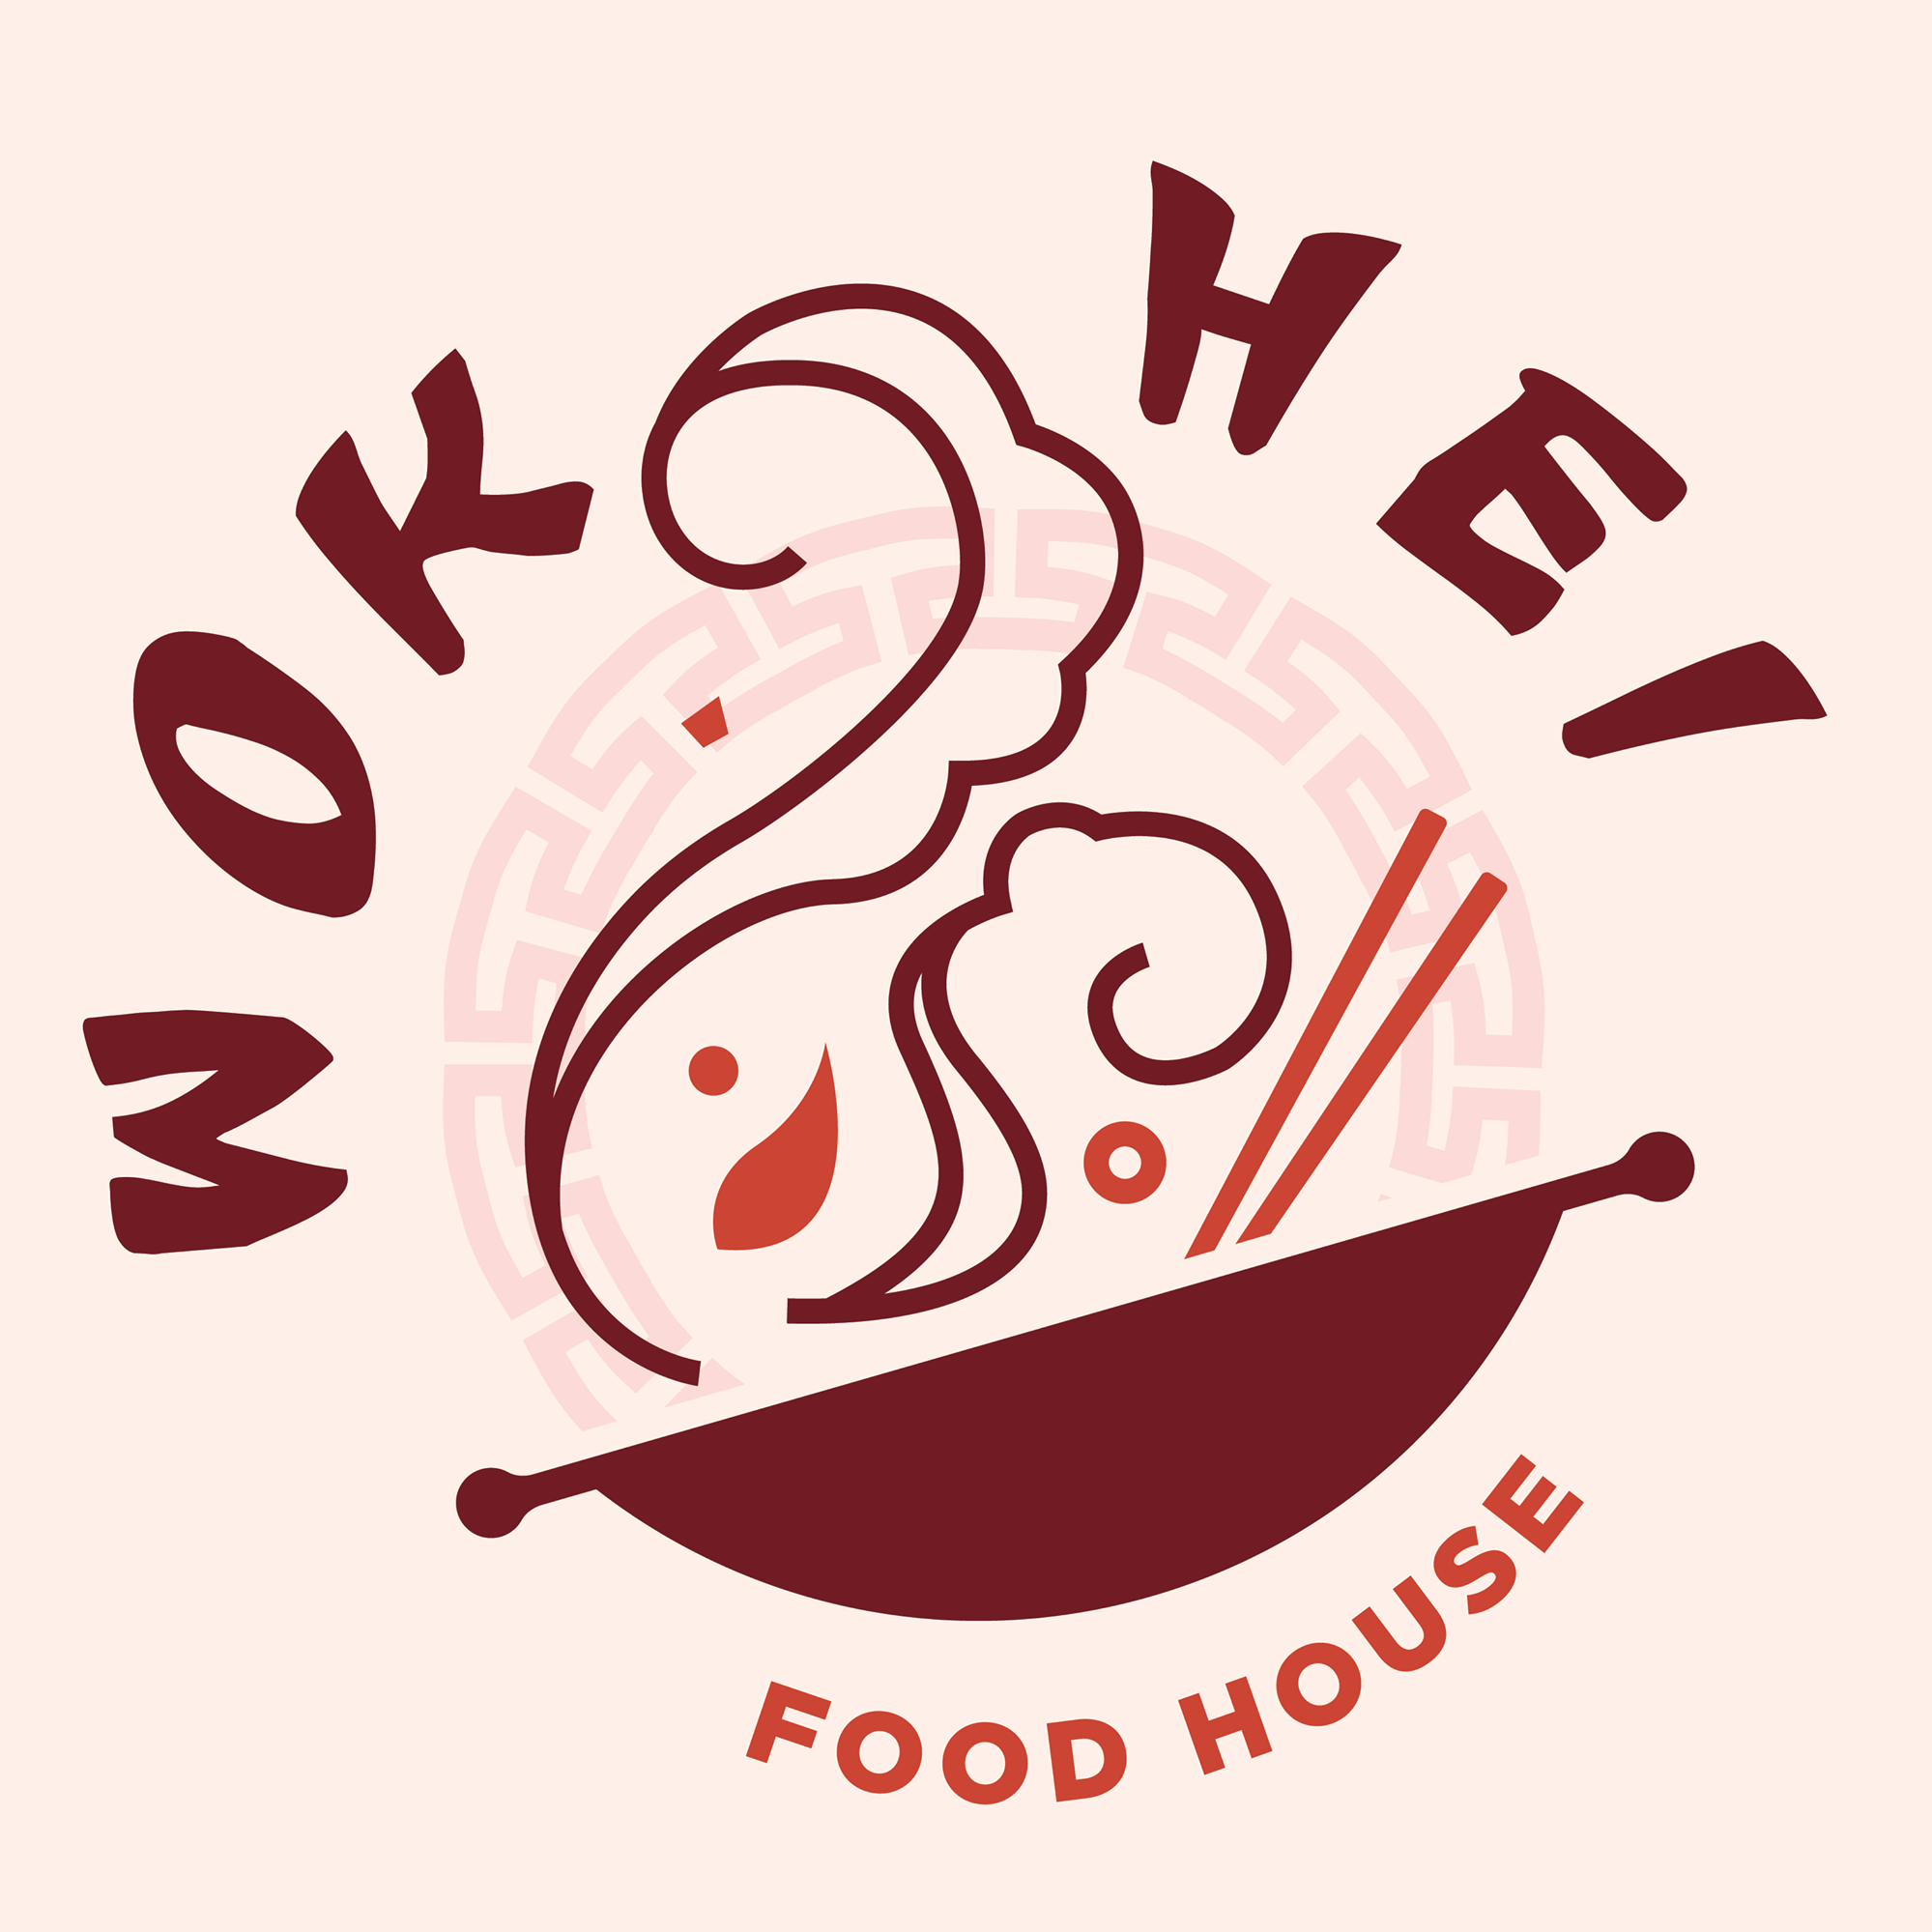 WOK HEI Food House 1 PROFILE